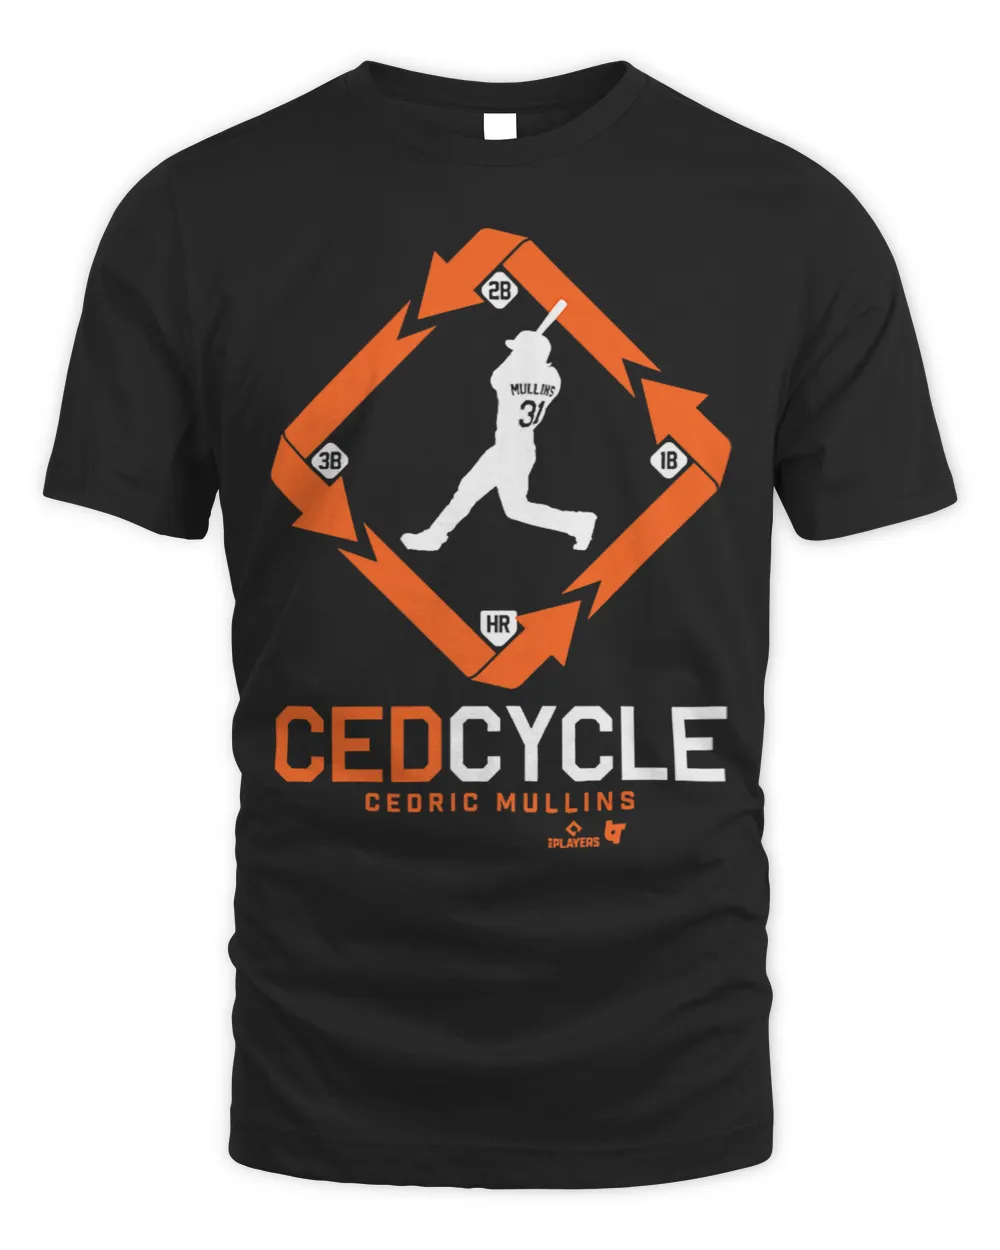 Cedric Mullins Cycle Baltimore Baseball